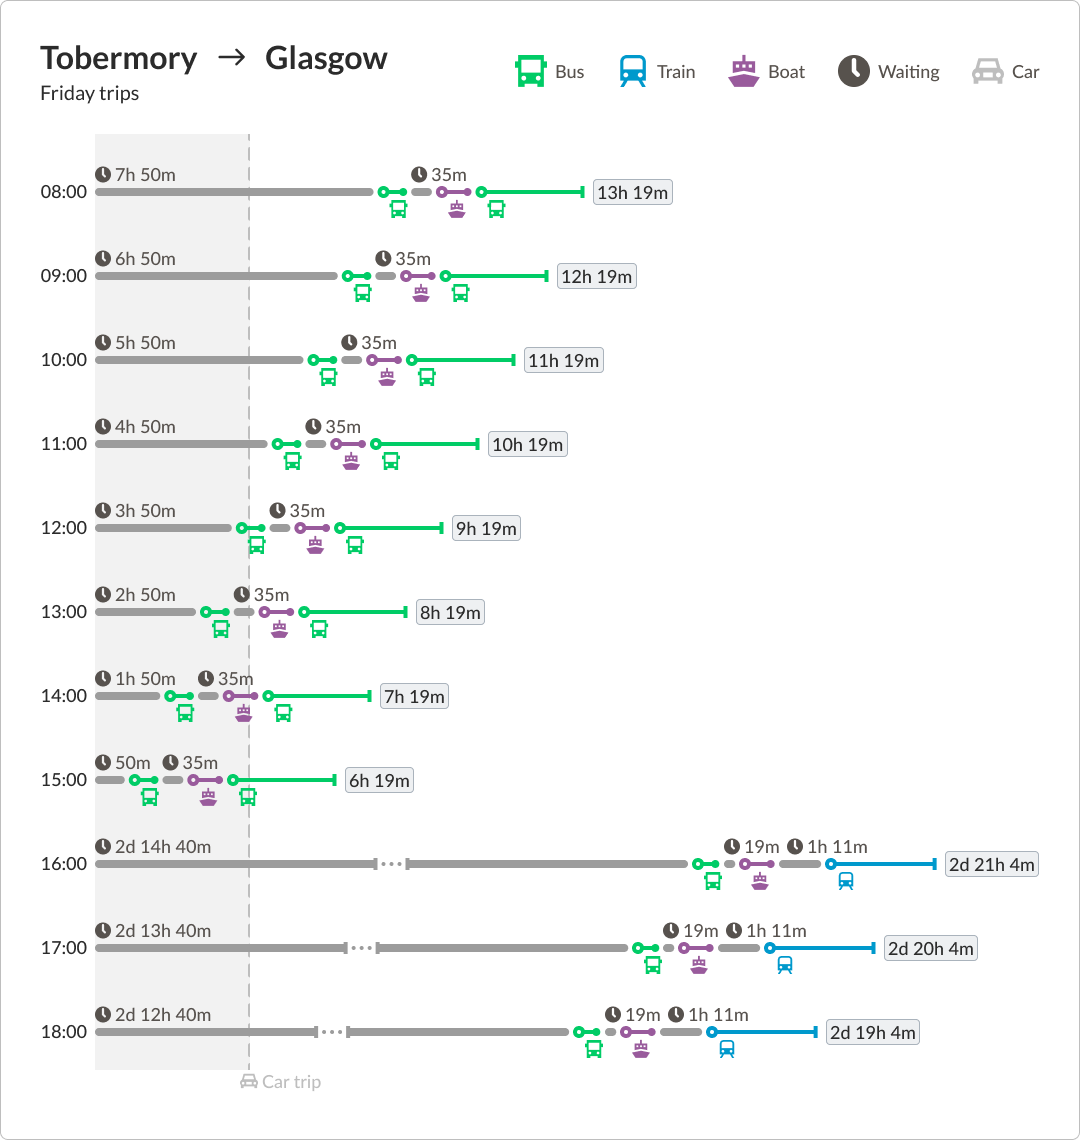 Tobermory-Glasgow Friday schedule